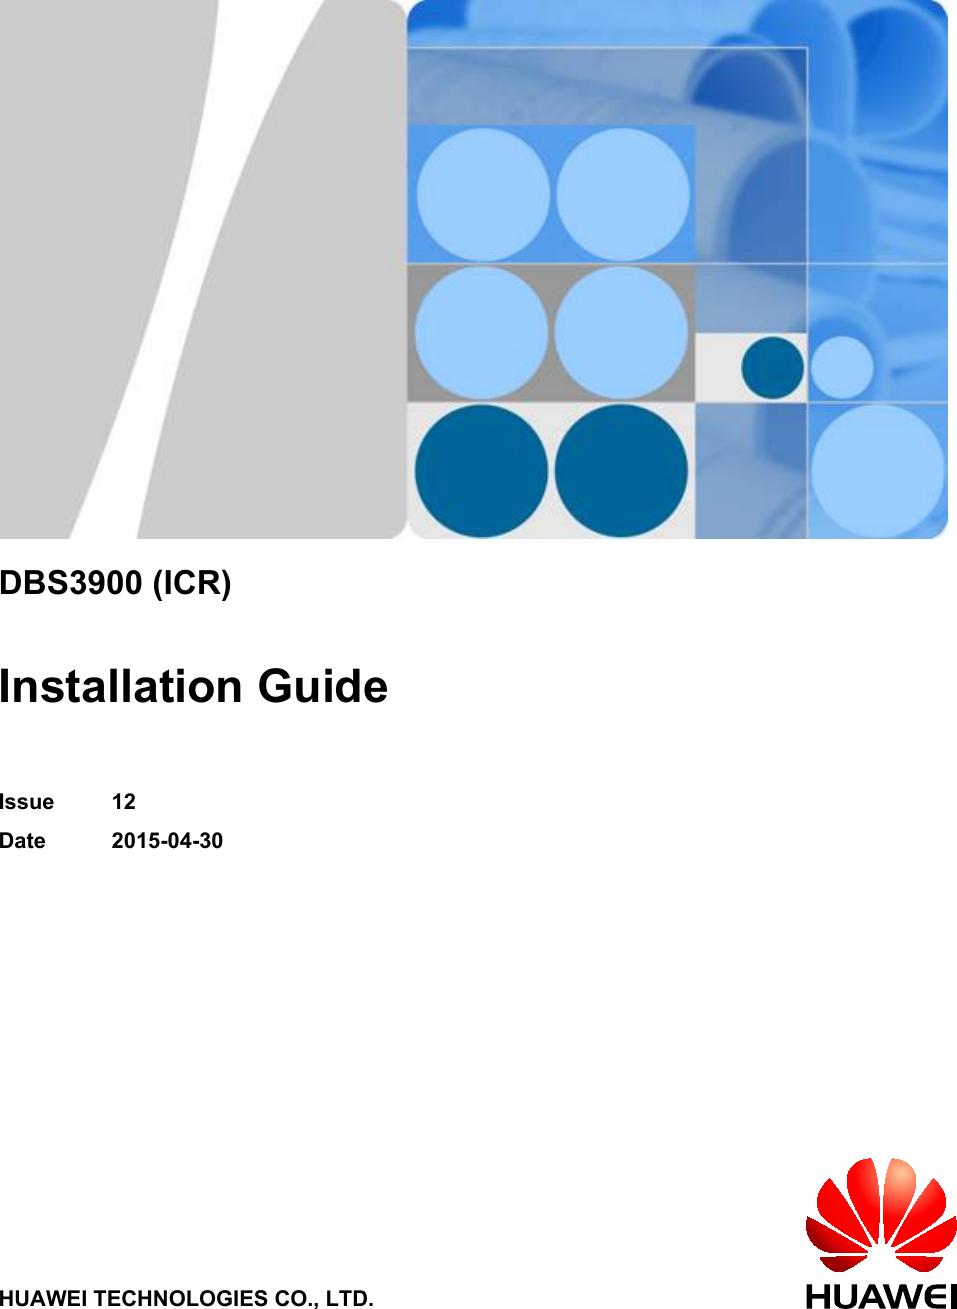 DBS3900 (ICR)Installation GuideIssue 12Date 2015-04-30HUAWEI TECHNOLOGIES CO., LTD.